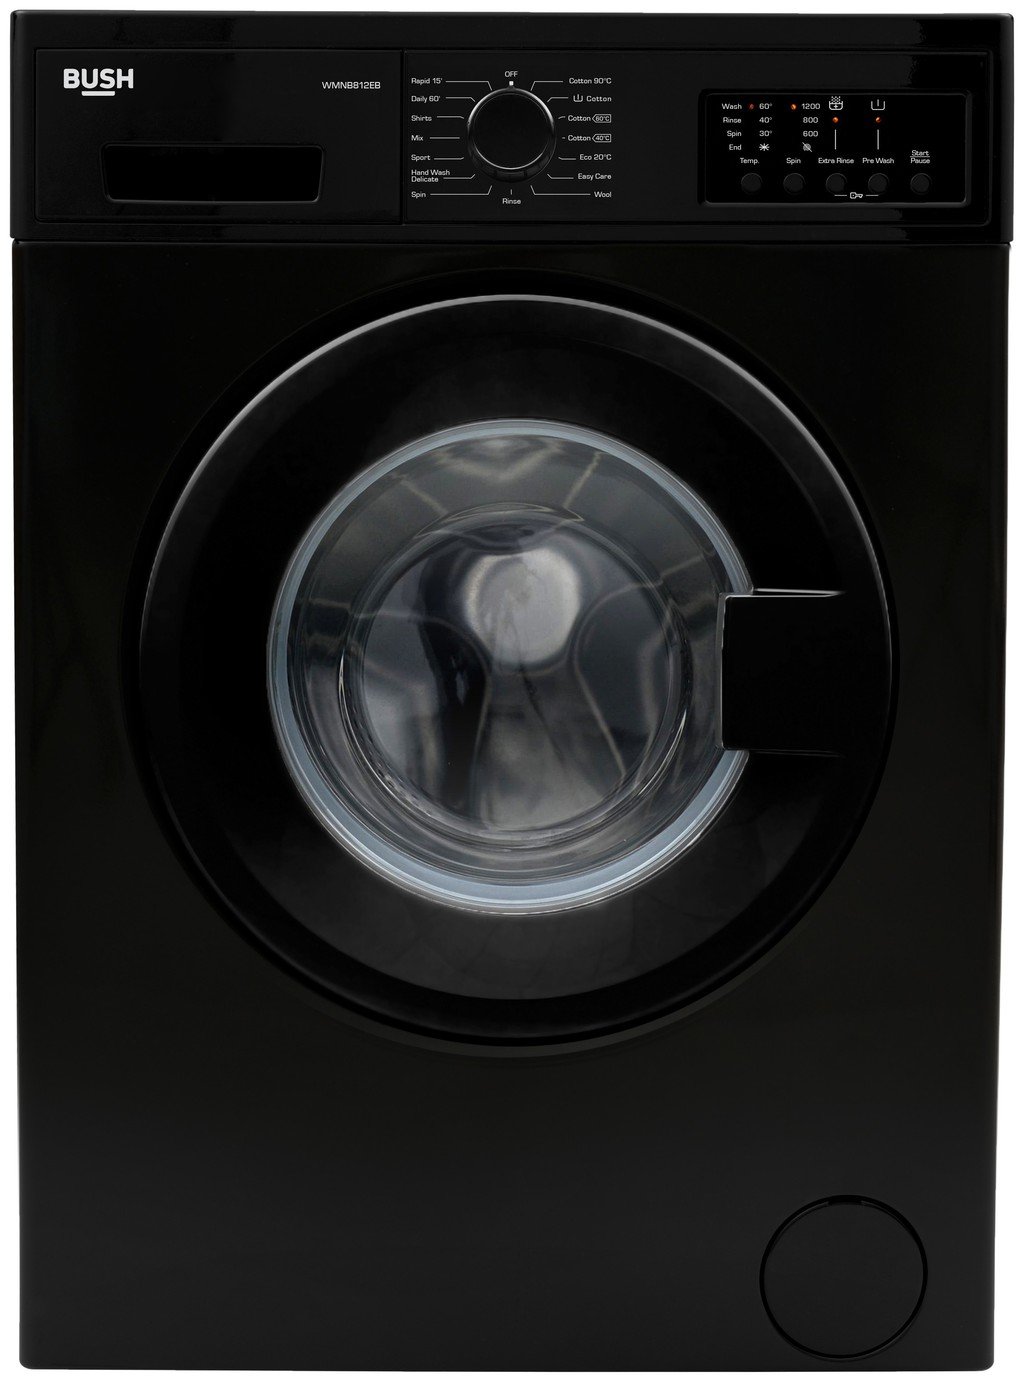 Bush WMNB812EB 8KG 1200 Spin Washing Machine review